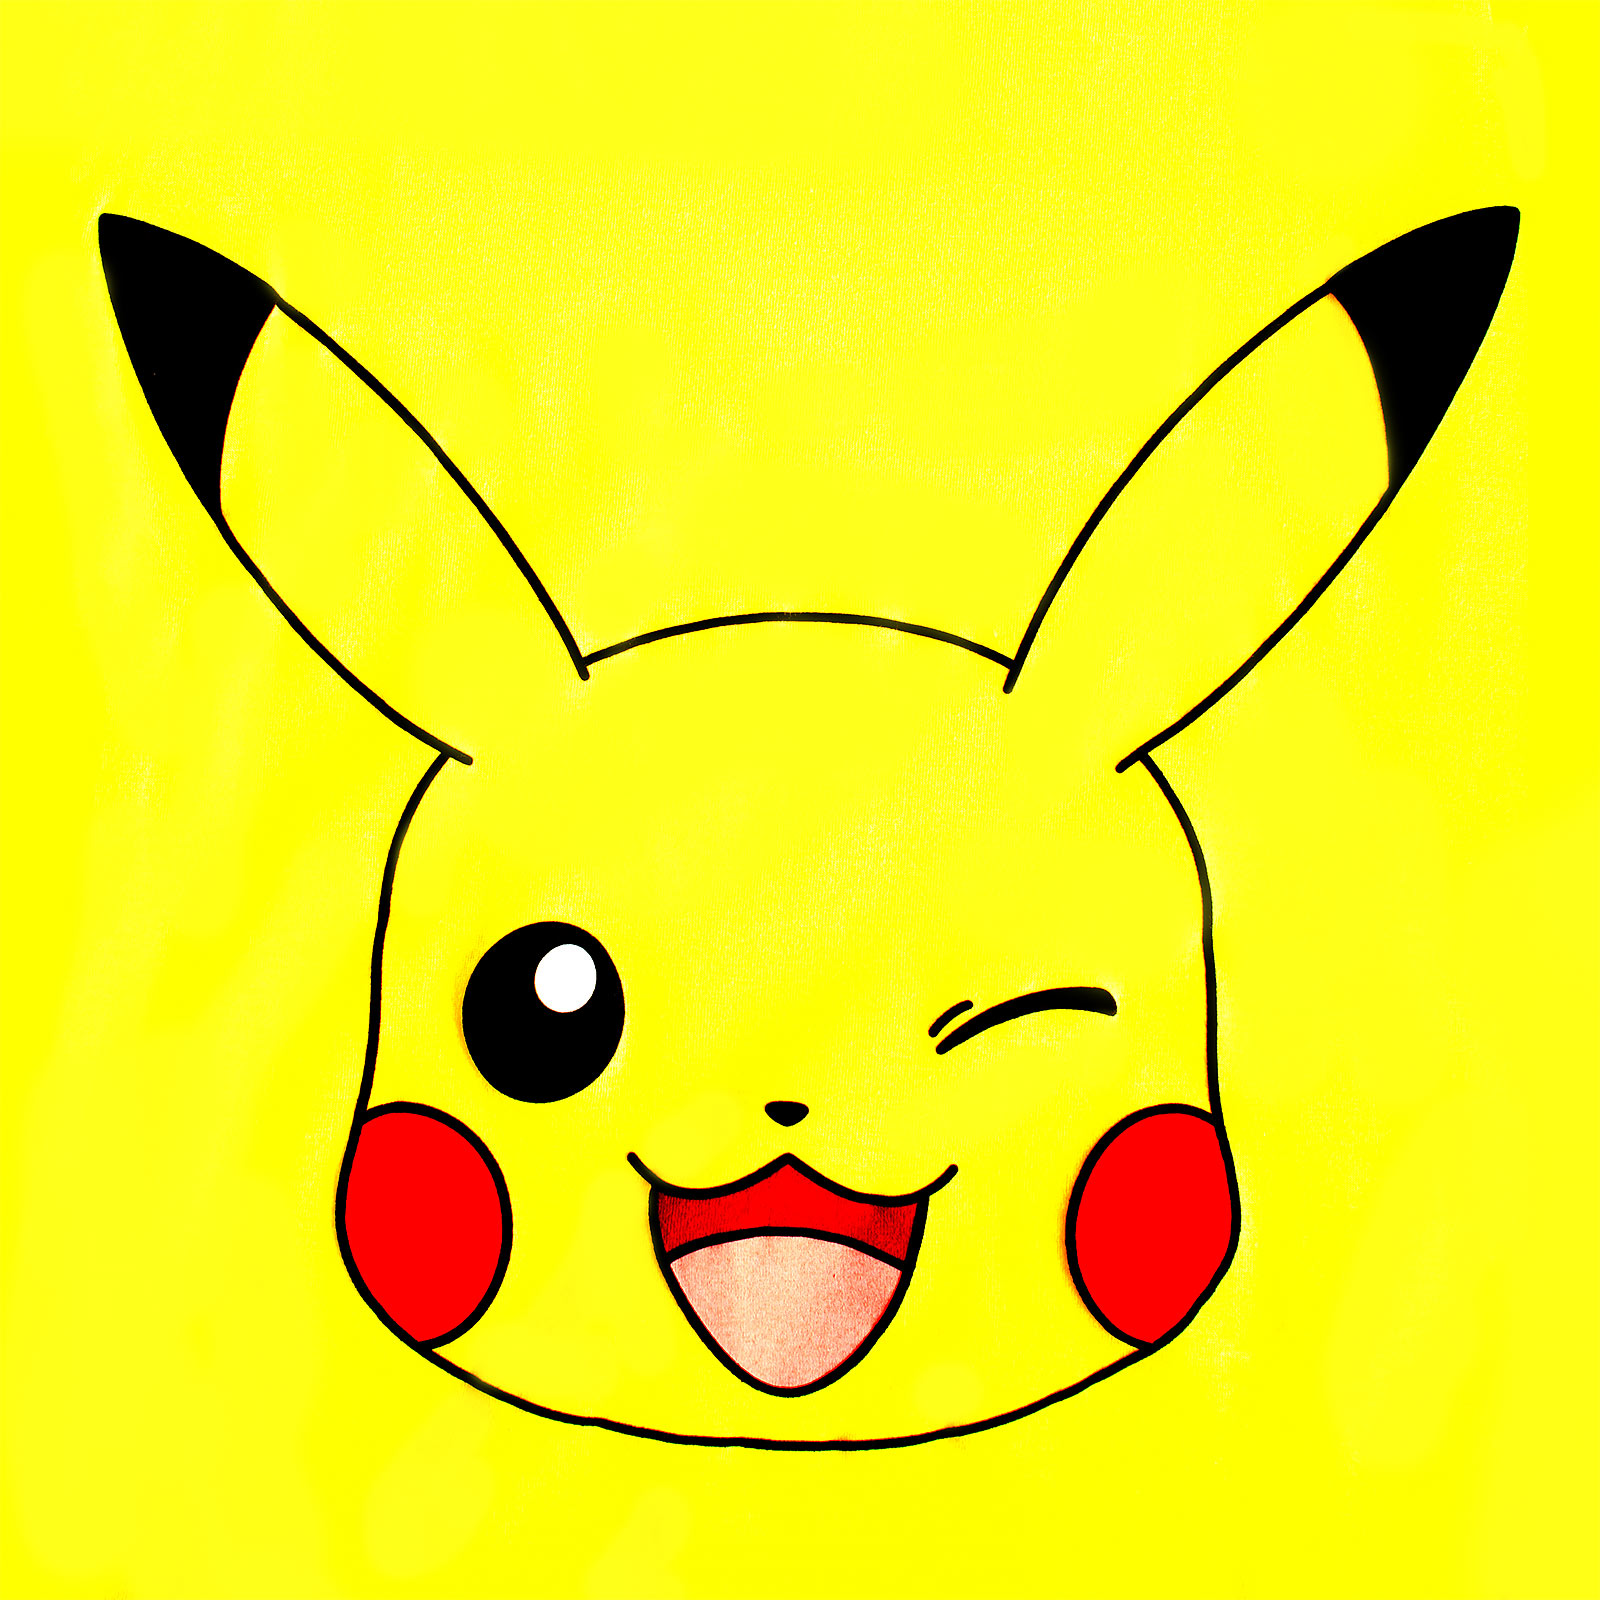 Pokemon - Pikachu Girlie Shirt gelb